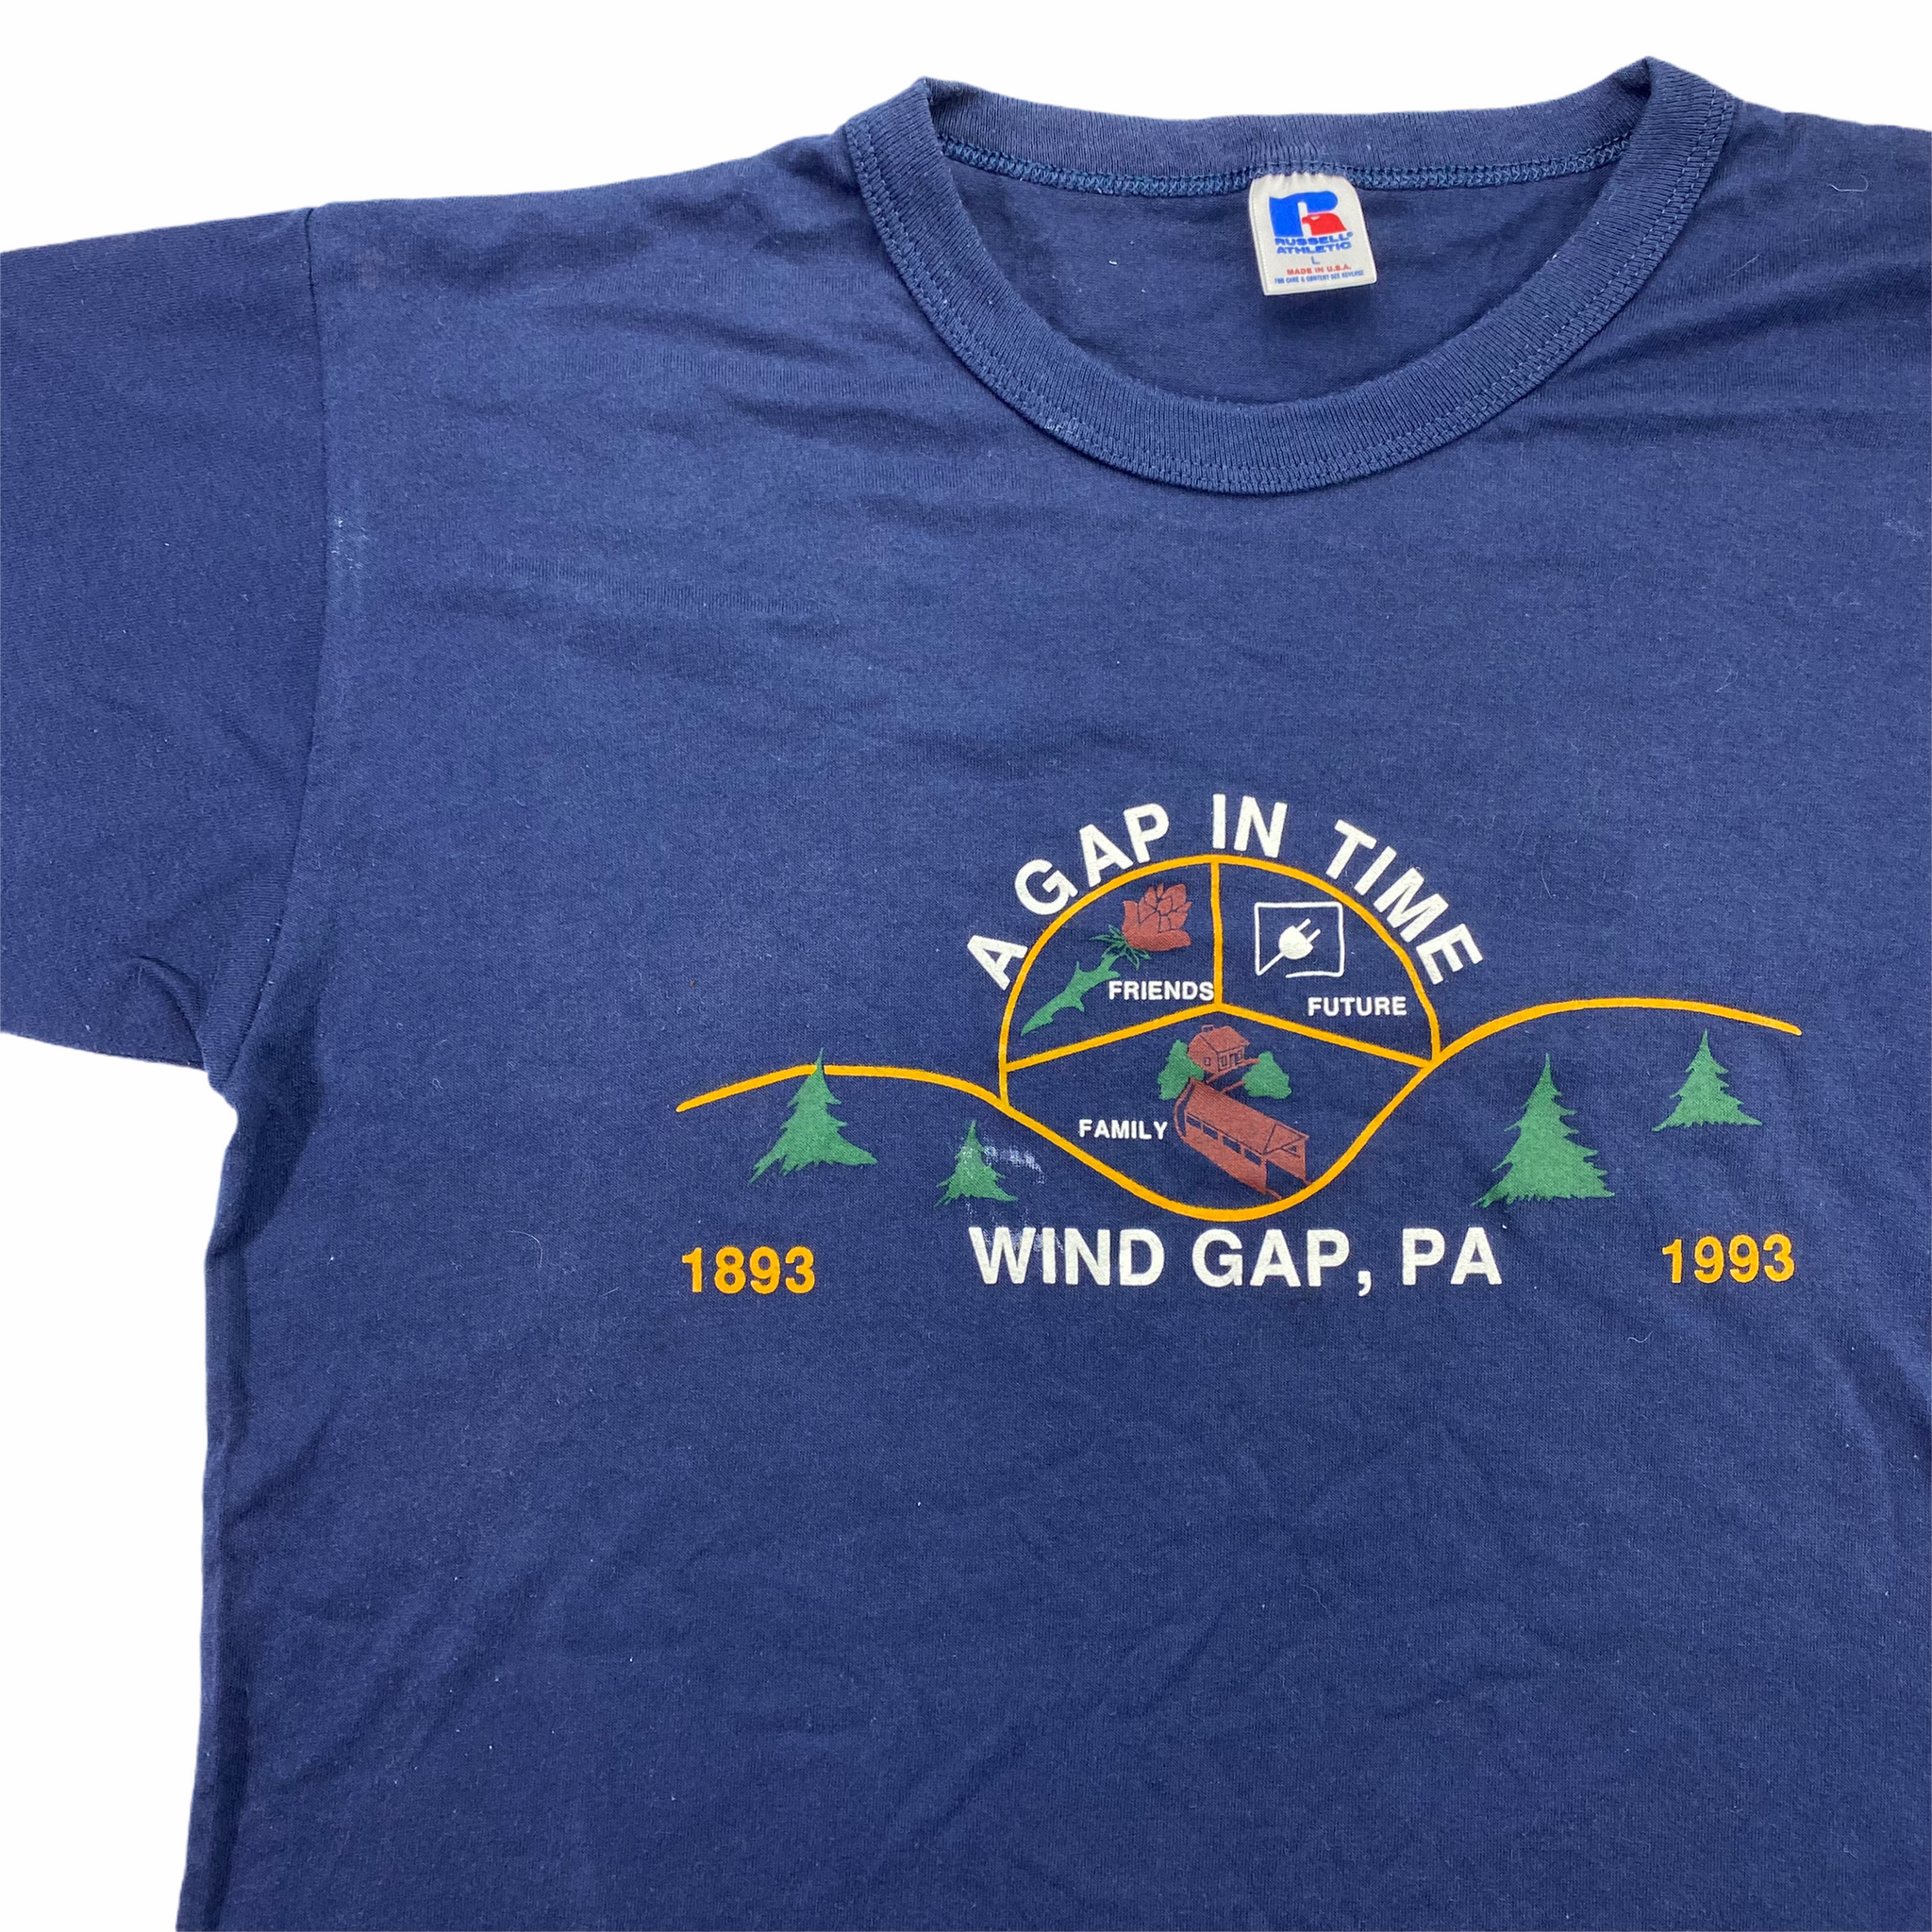 1993 wind gap tee. large